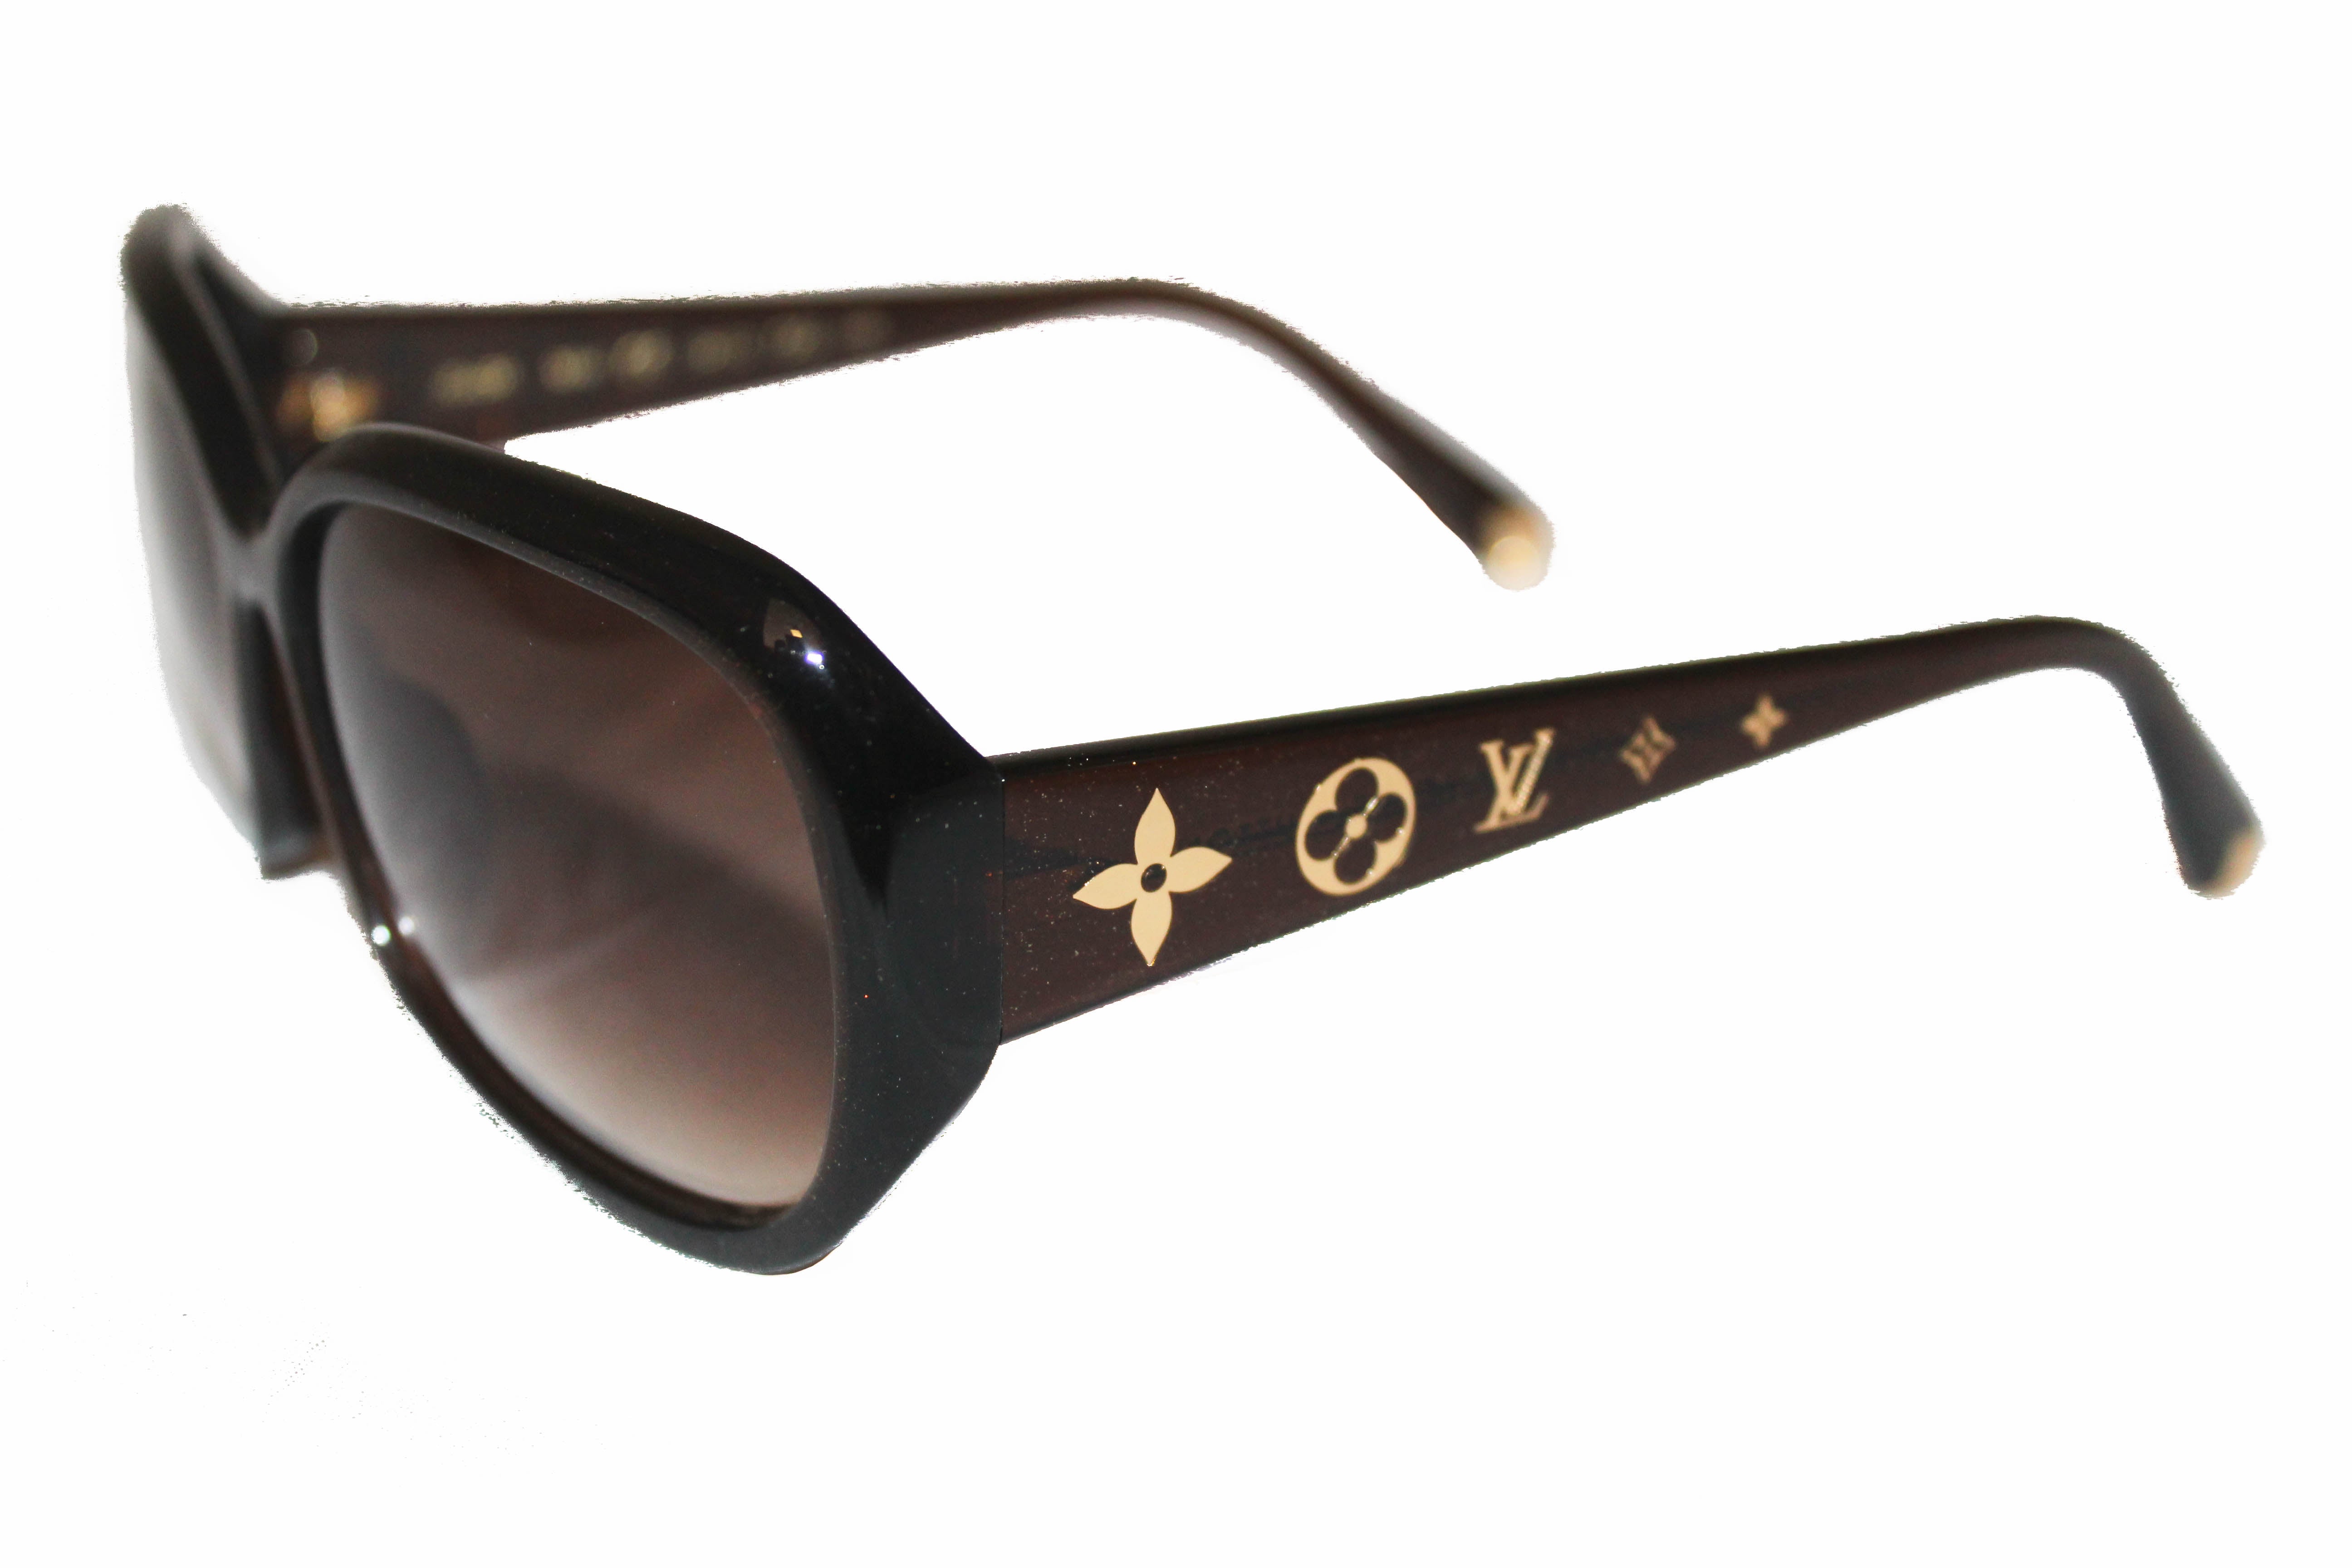 Genuine Louis Vuitton sunglasses. LV logo in the